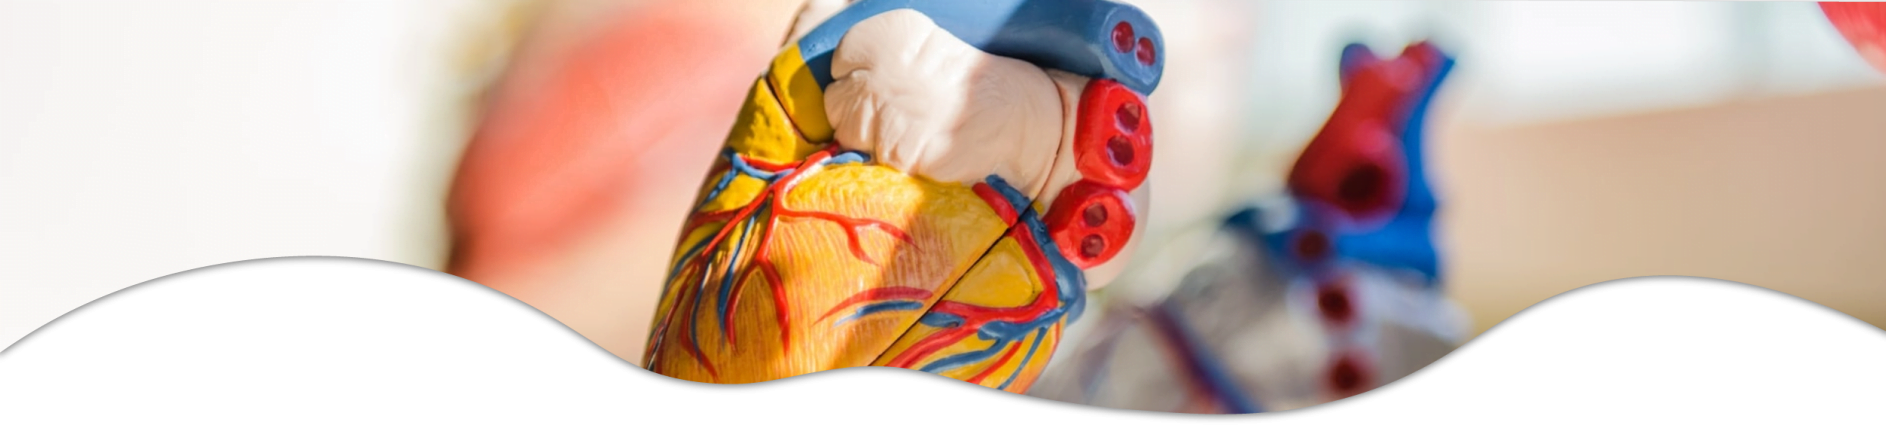 plastic model of a realistic heart